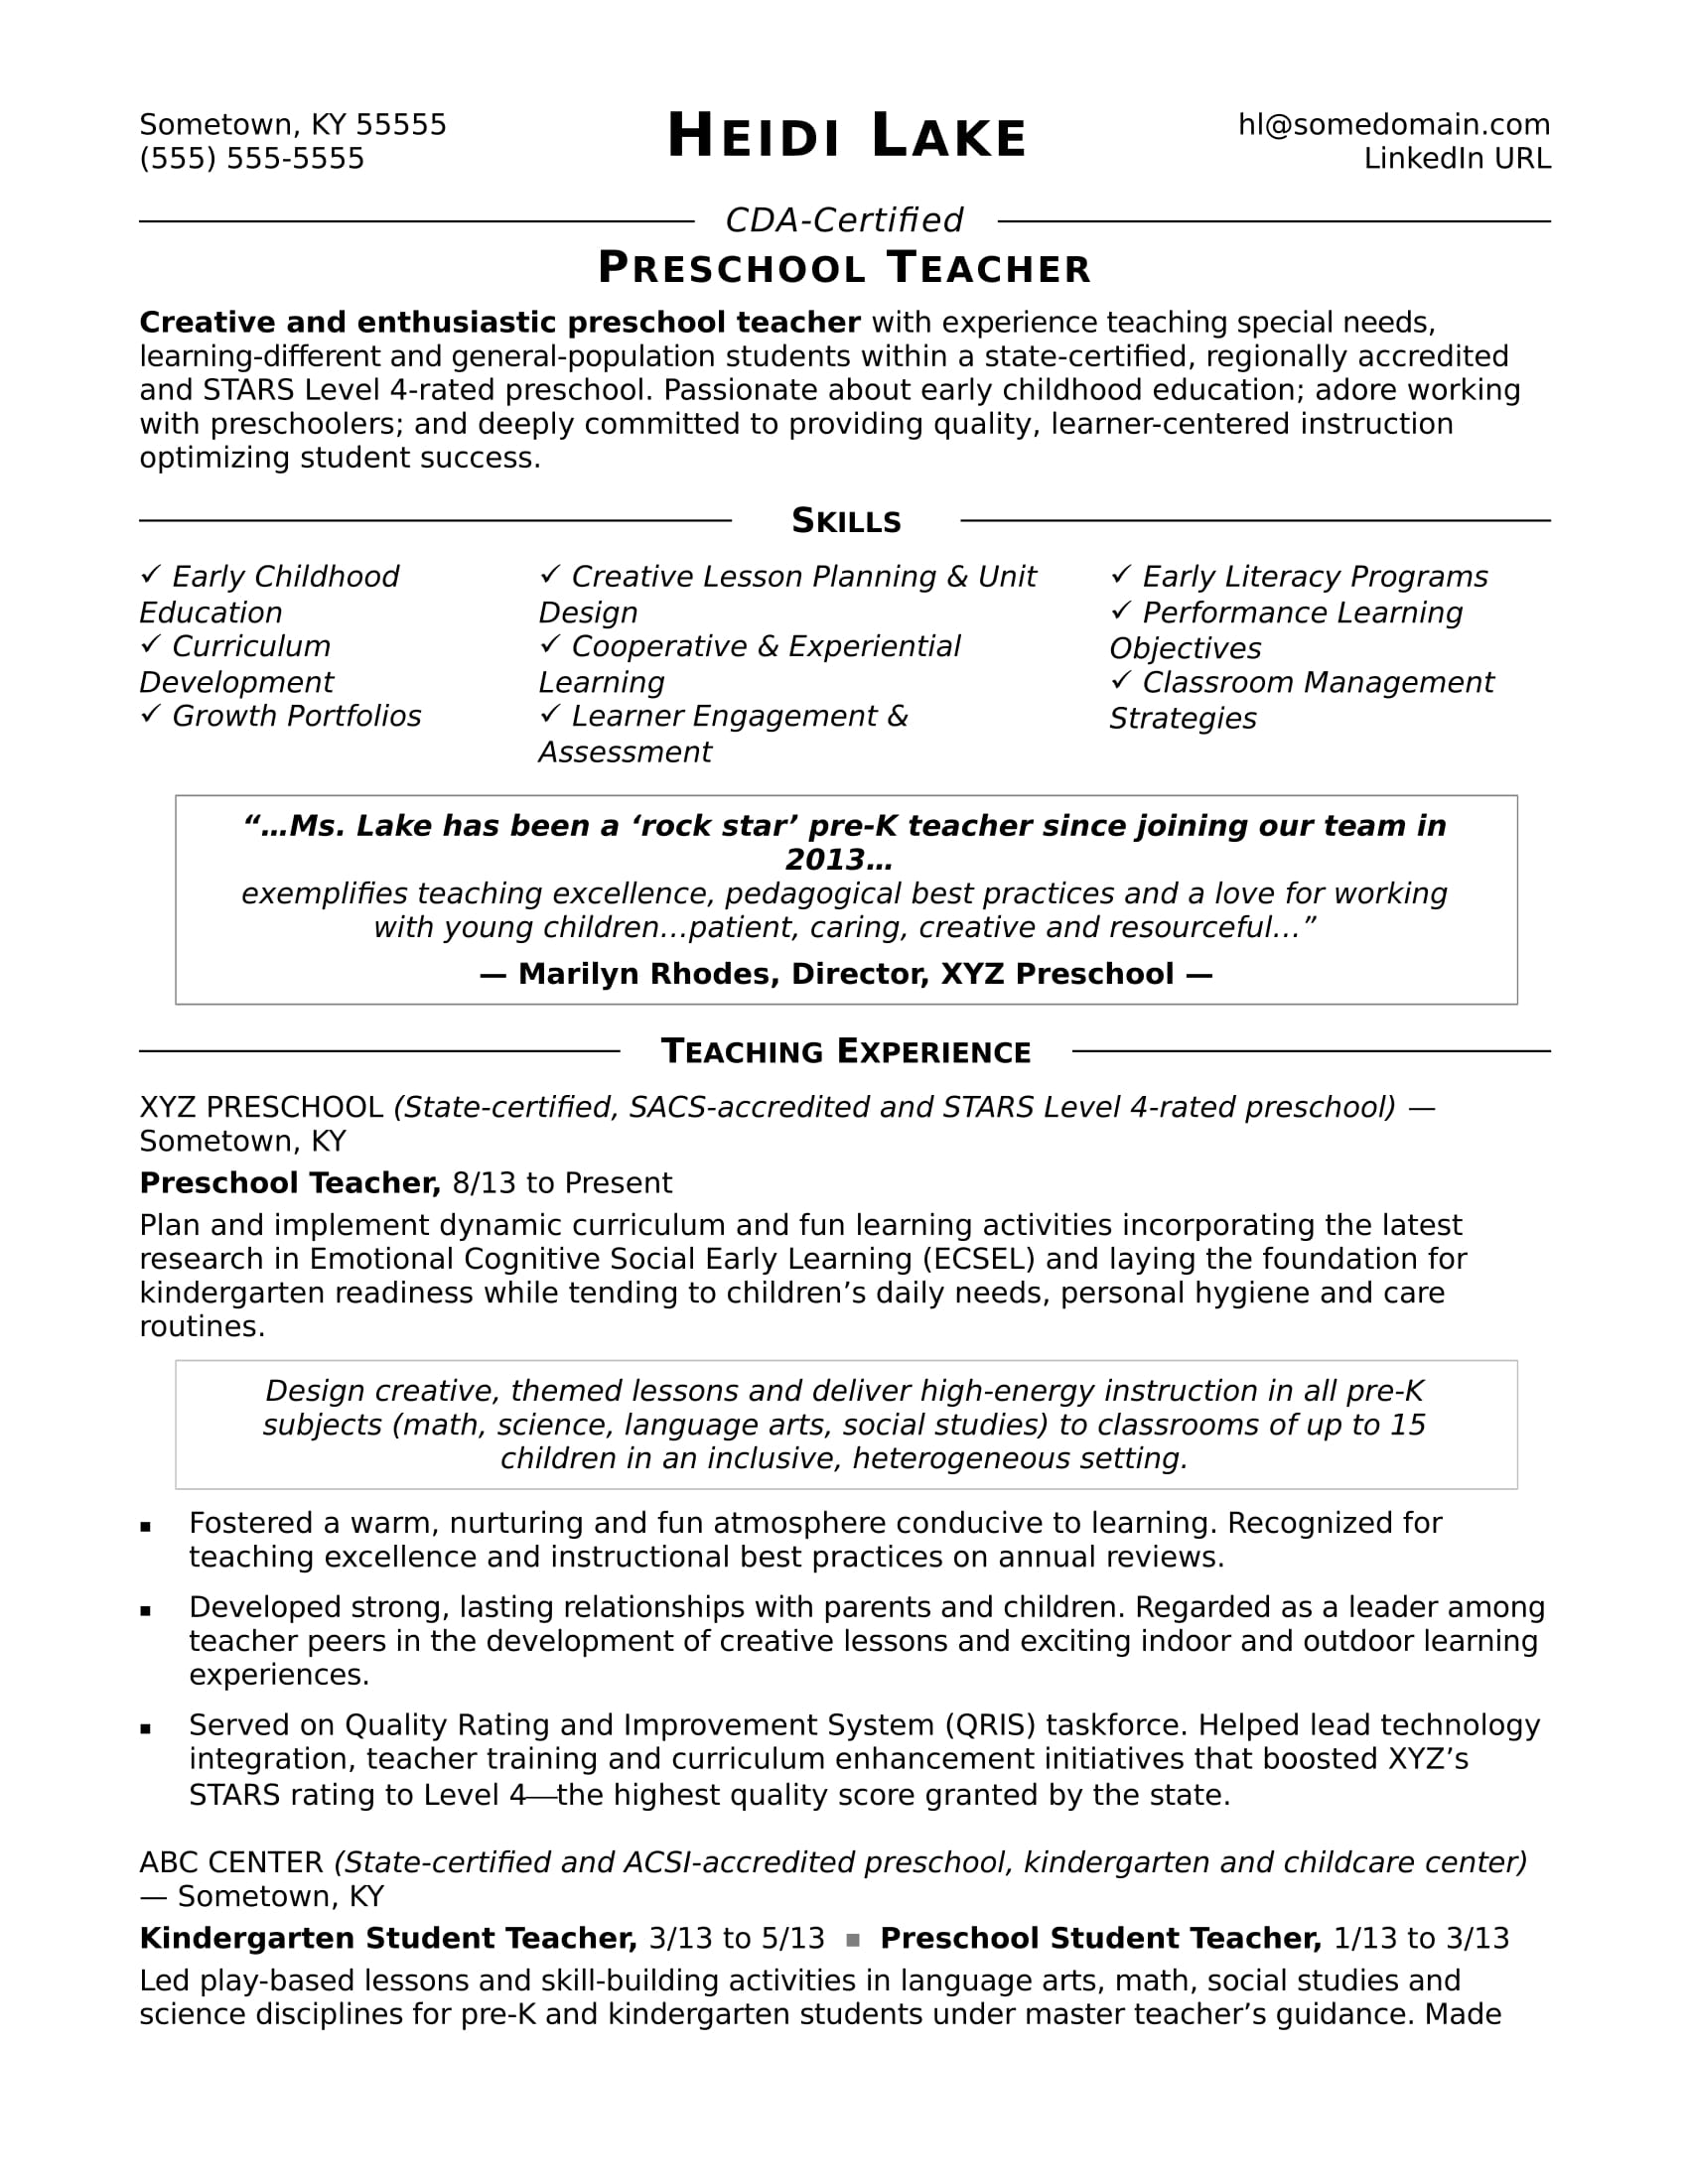 preschool teacher resume sample